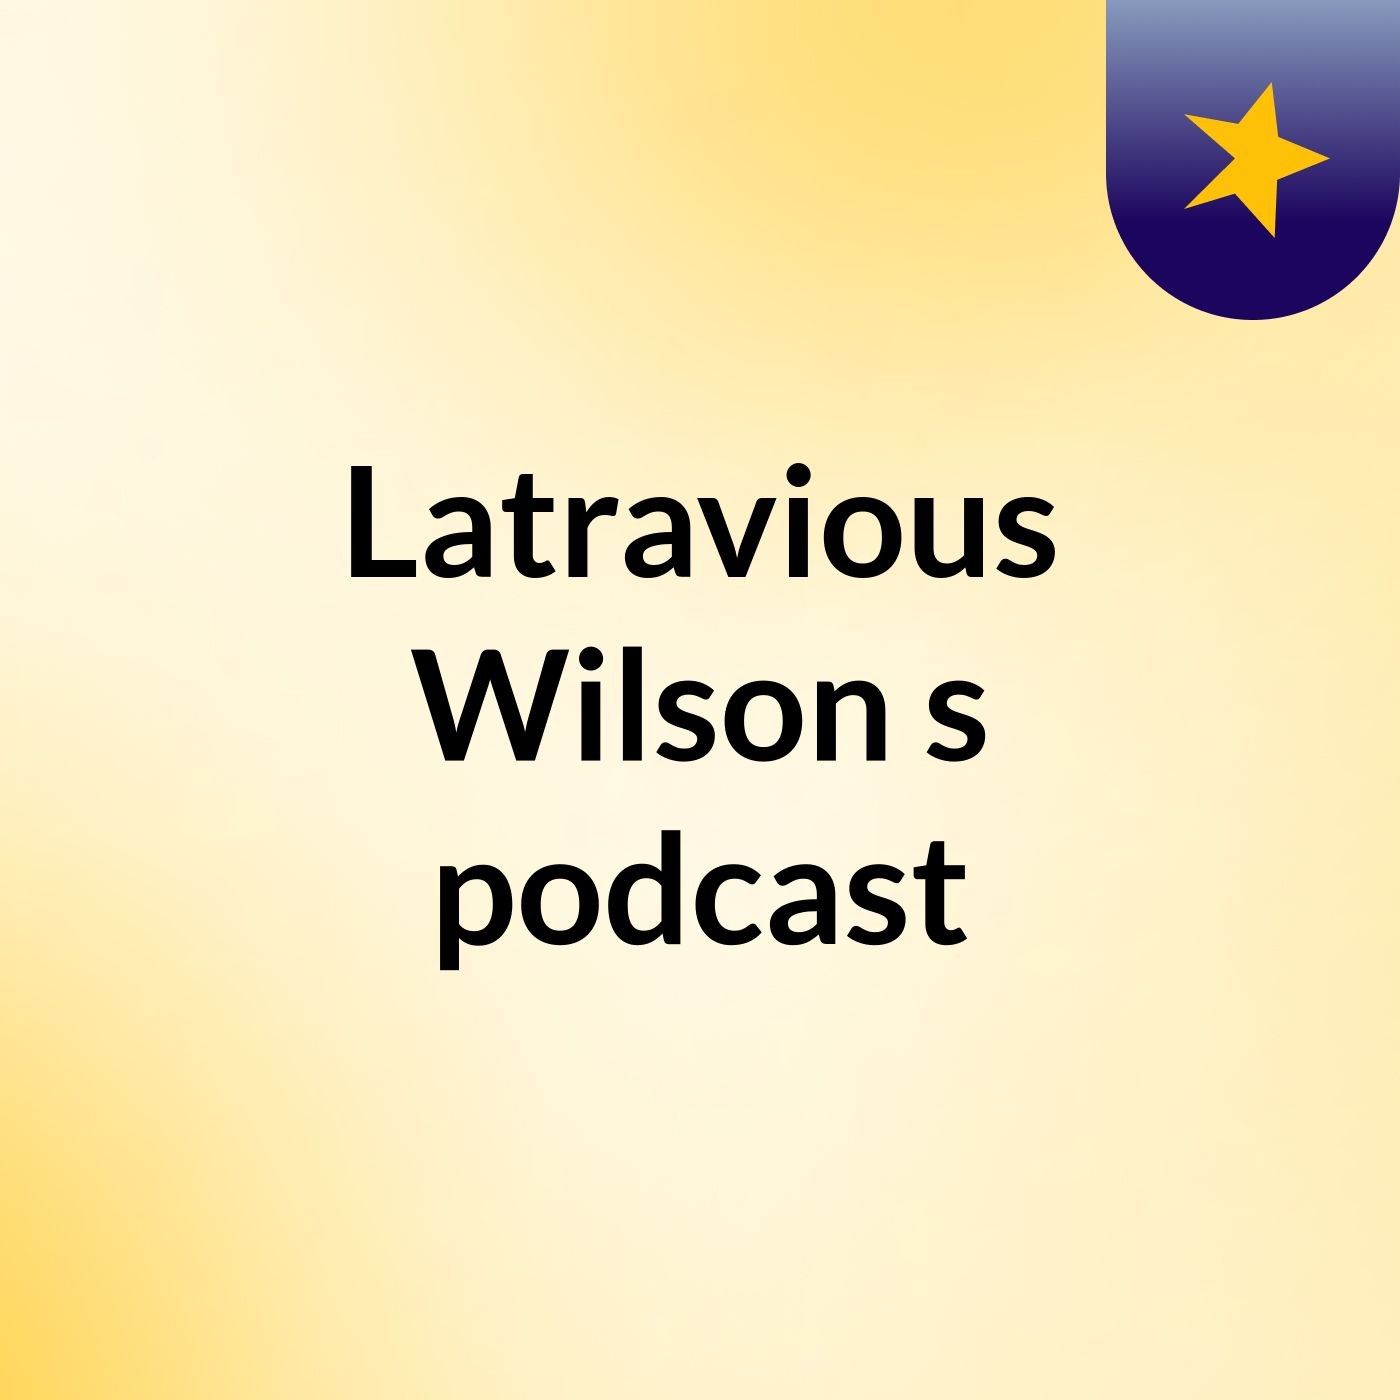 Latravious Wilson's podcast